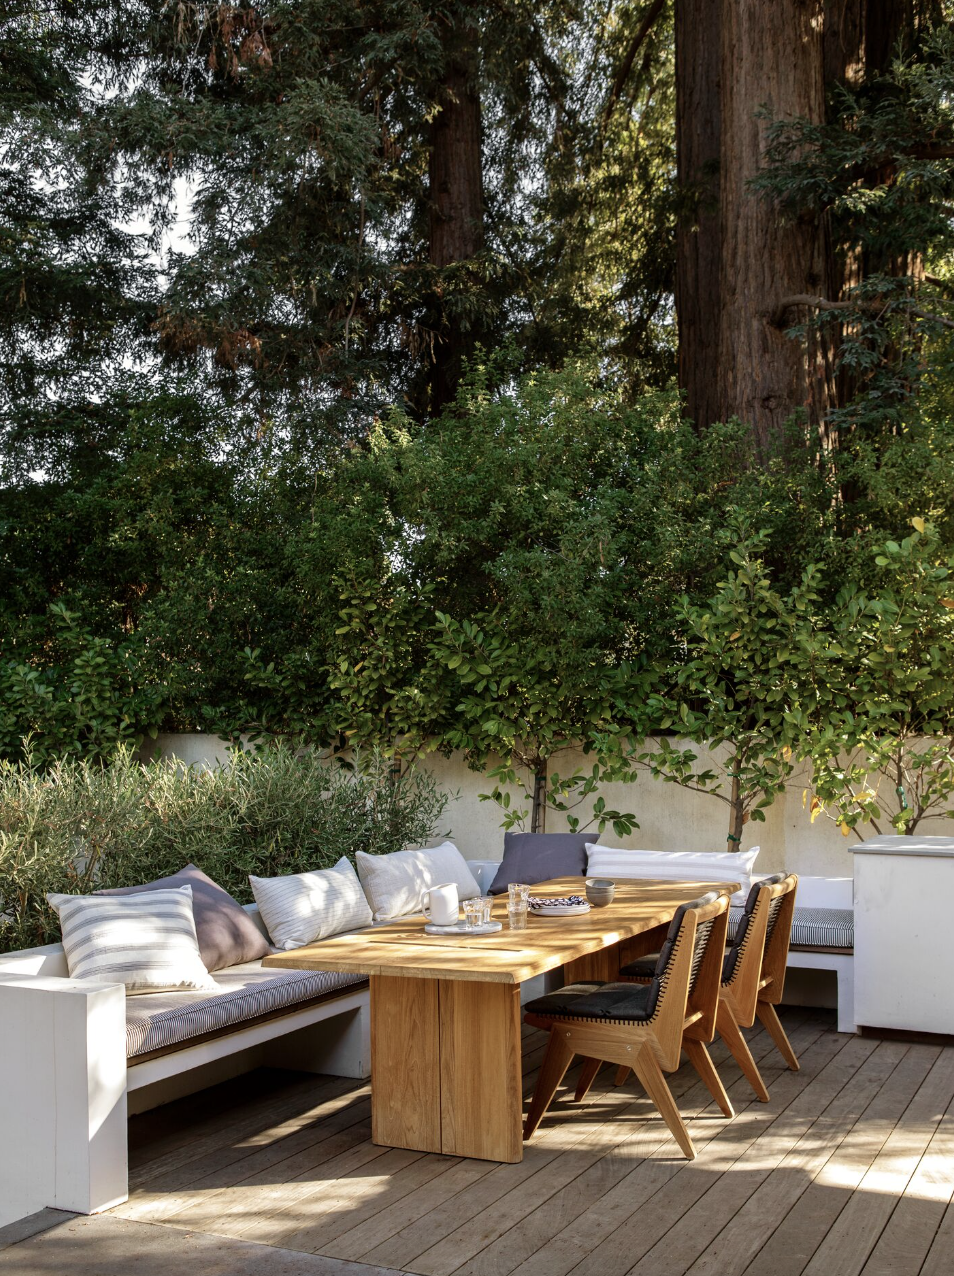 32 Creative Deck Ideas - Beautiful Outdoor Deck Designs